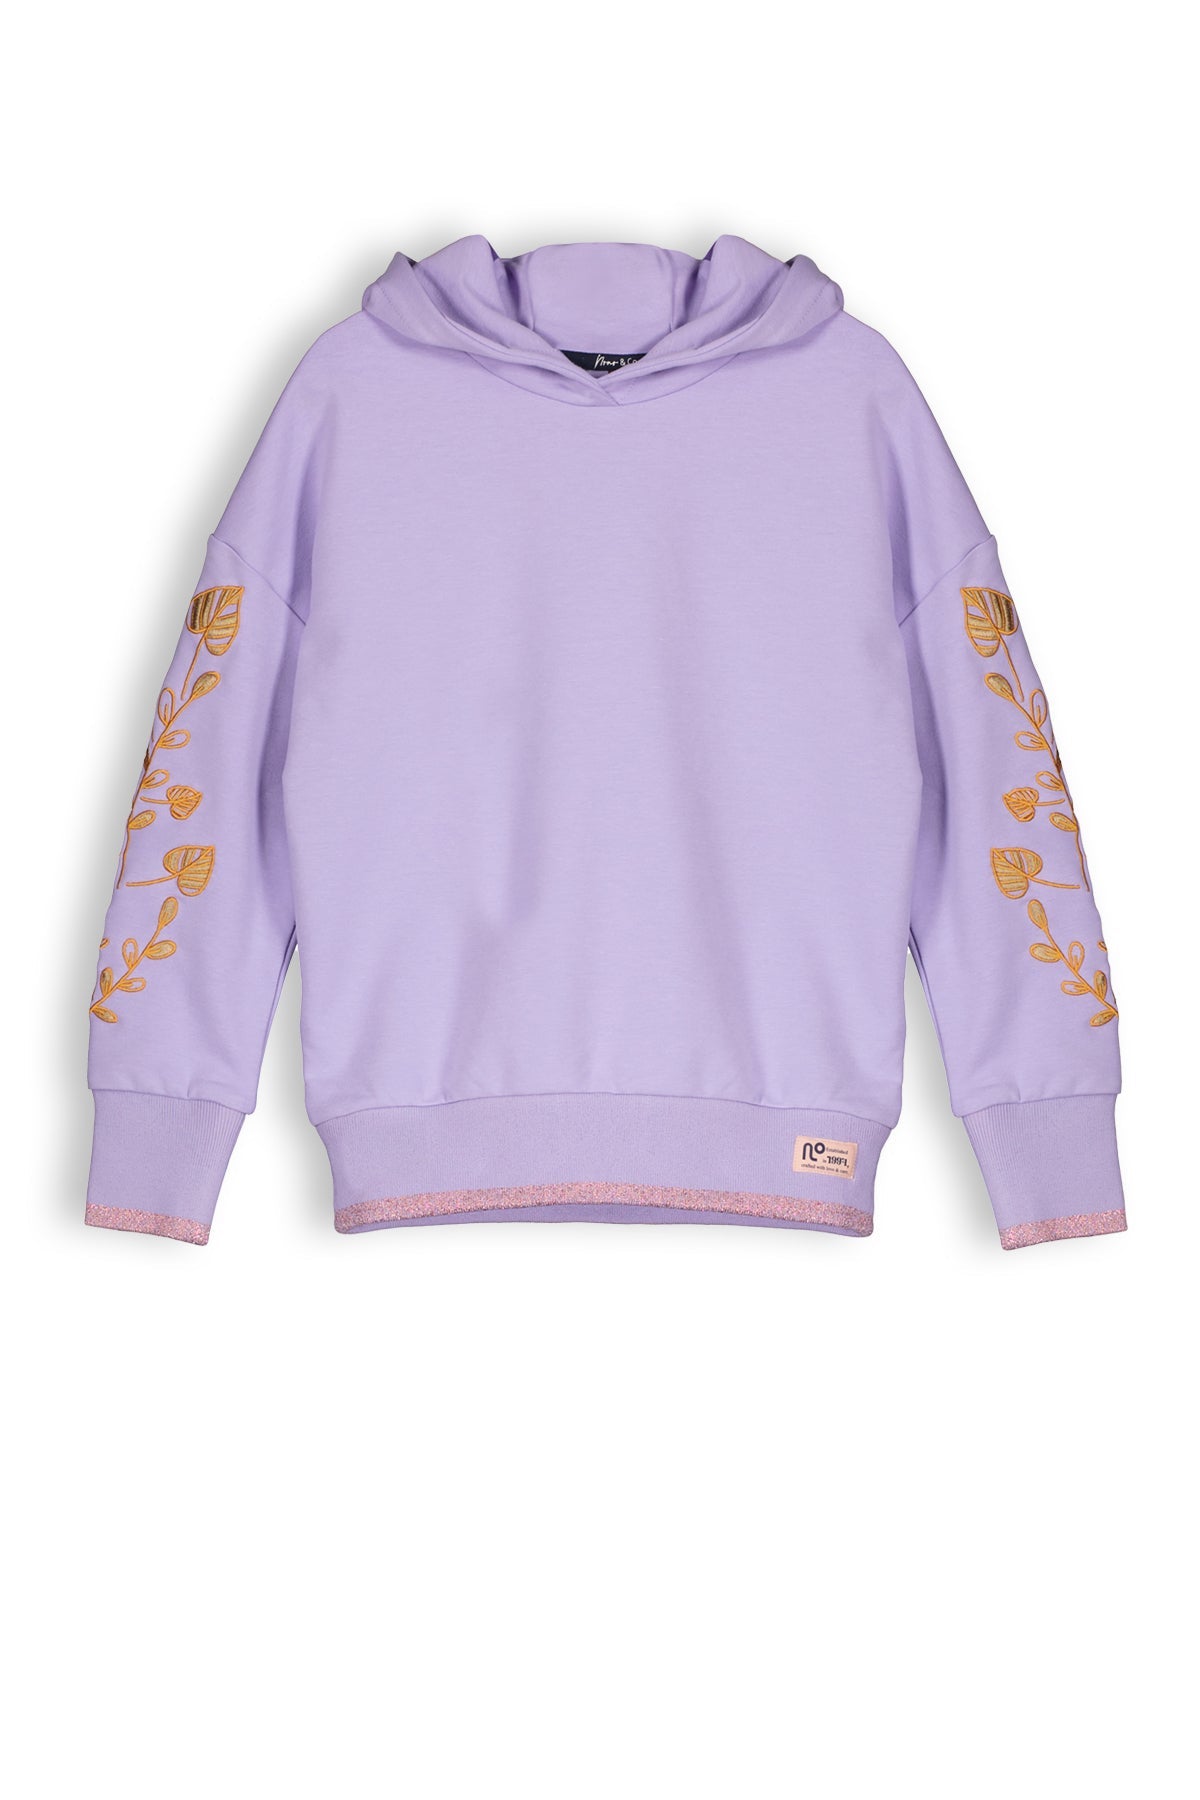 Meisjes Kumy girls hooded sweater van NoNo in de kleur Galaxy Lilac in maat 134-140.